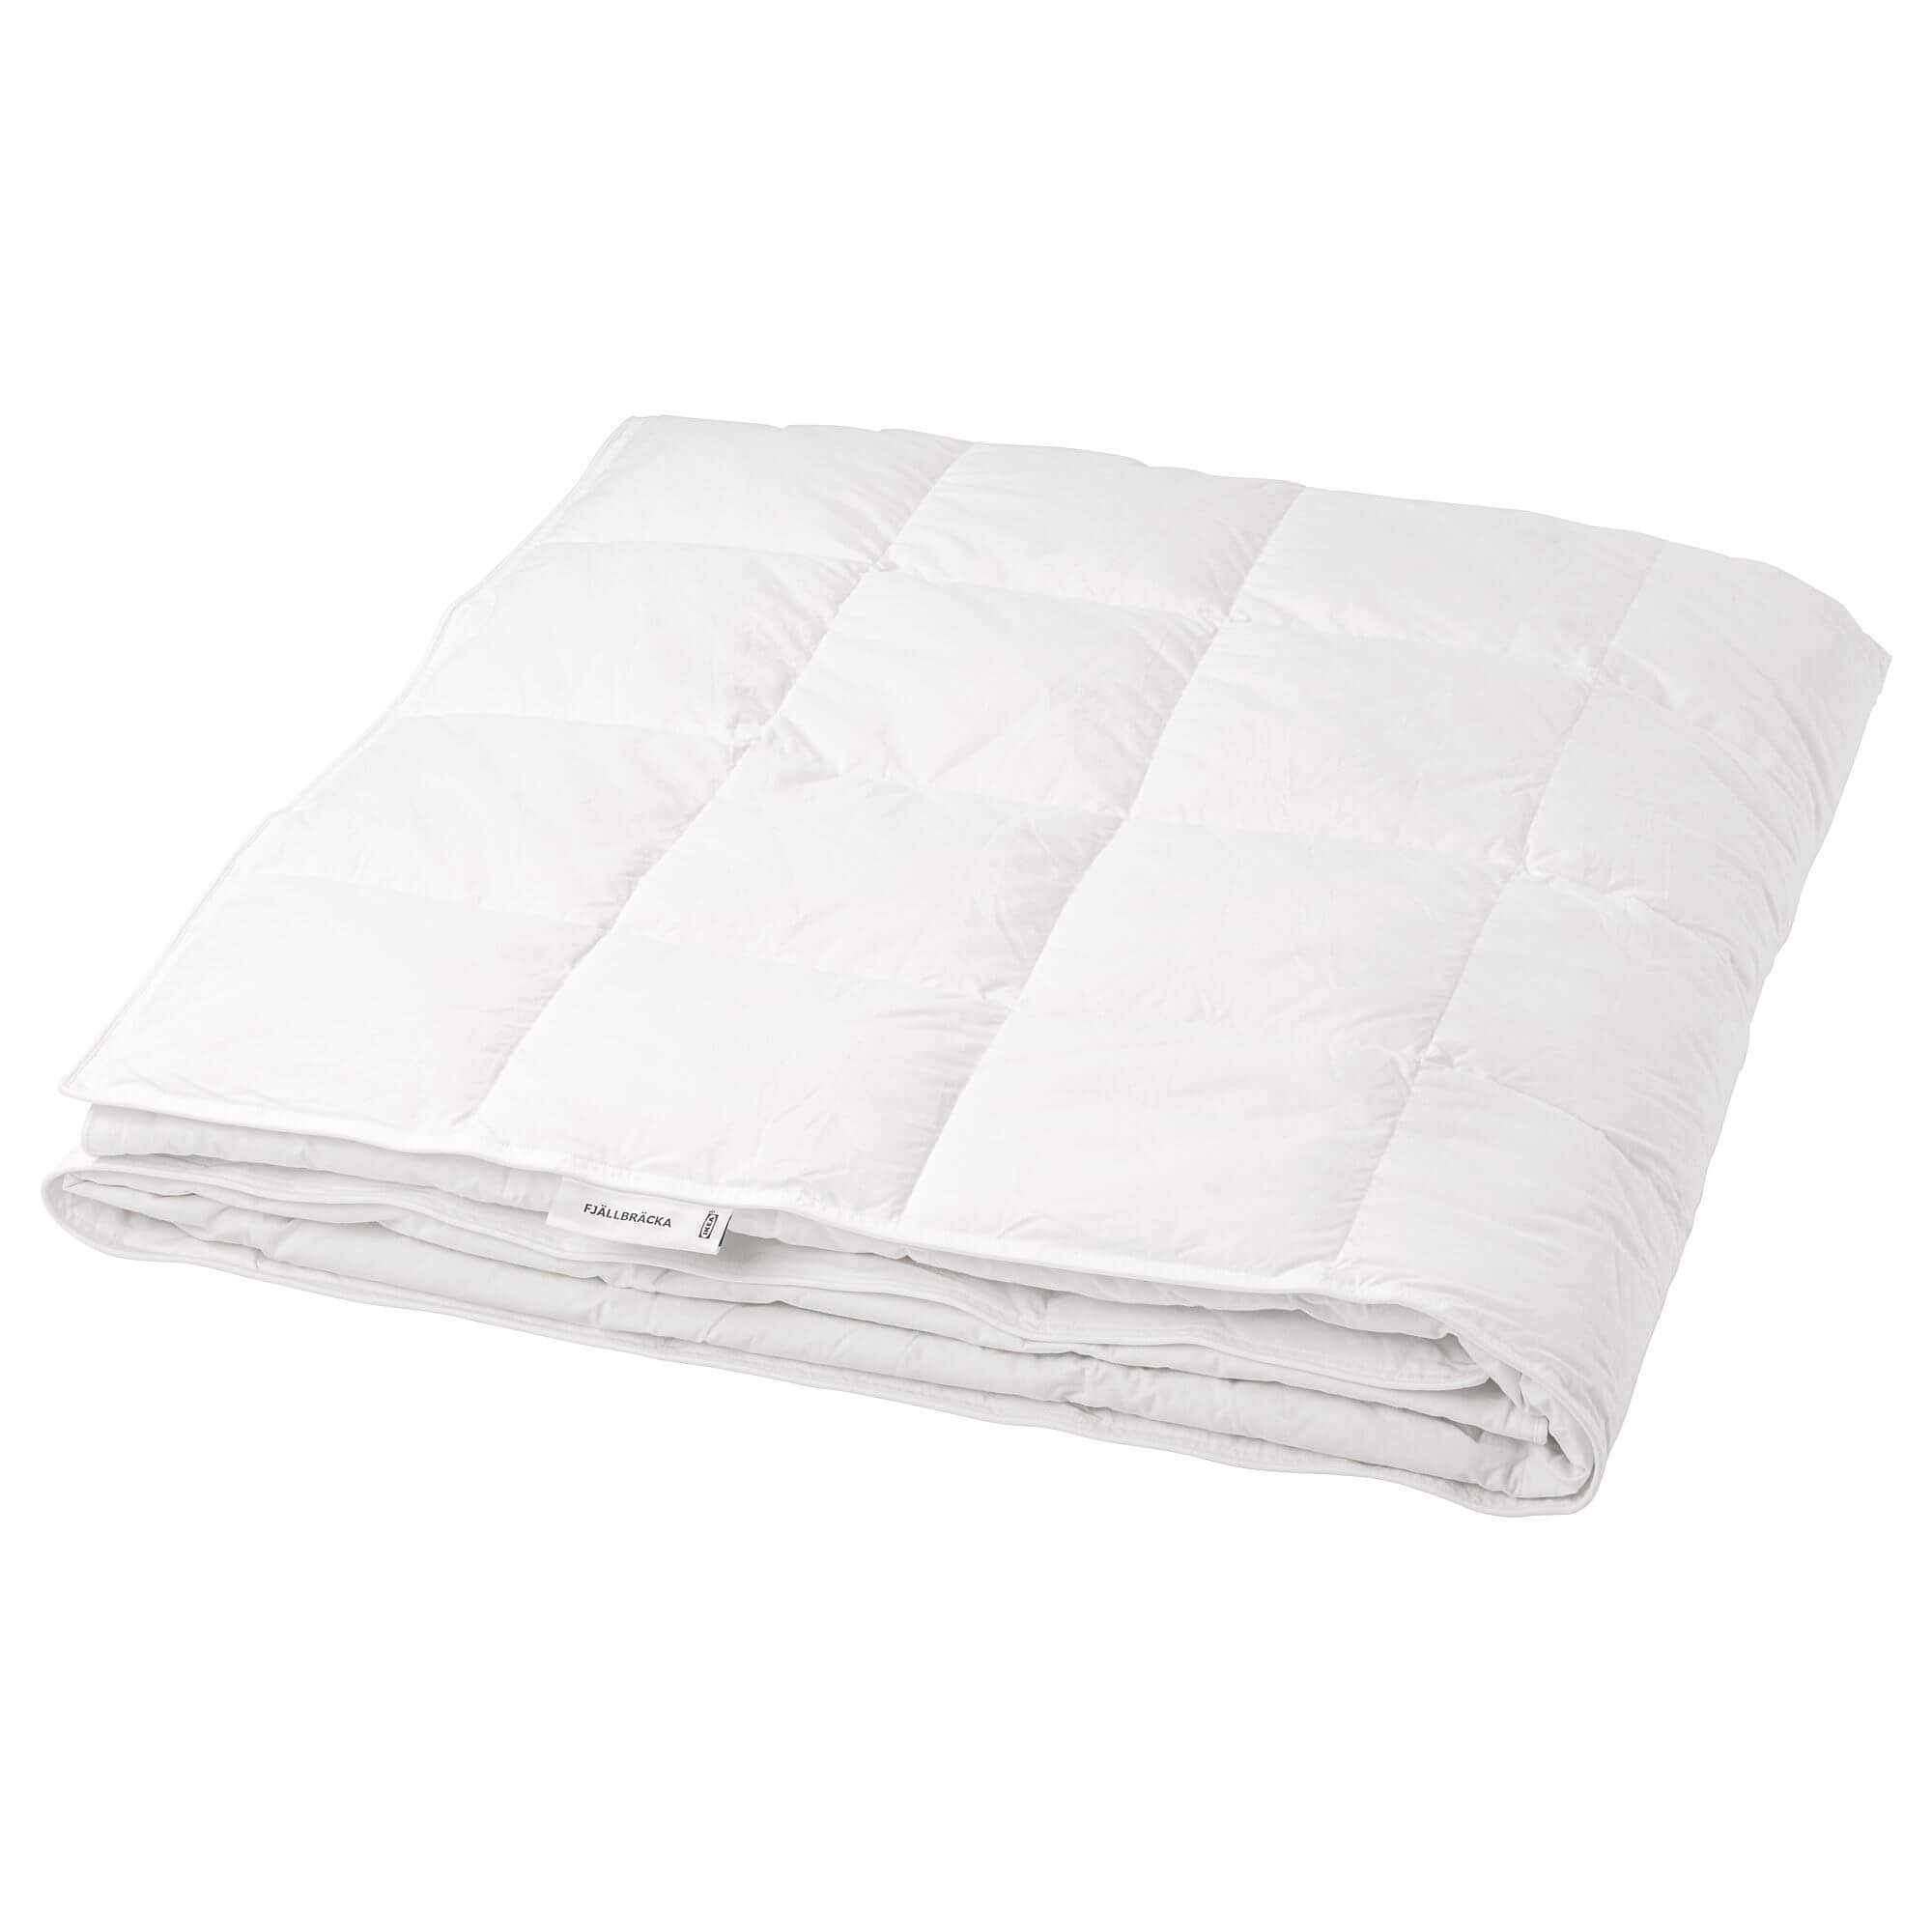 Одеяло теплое Ikea Fjallbracka 240x220 см, белый одеяло chaude 70 утиного пуха 140 x 200 см белый